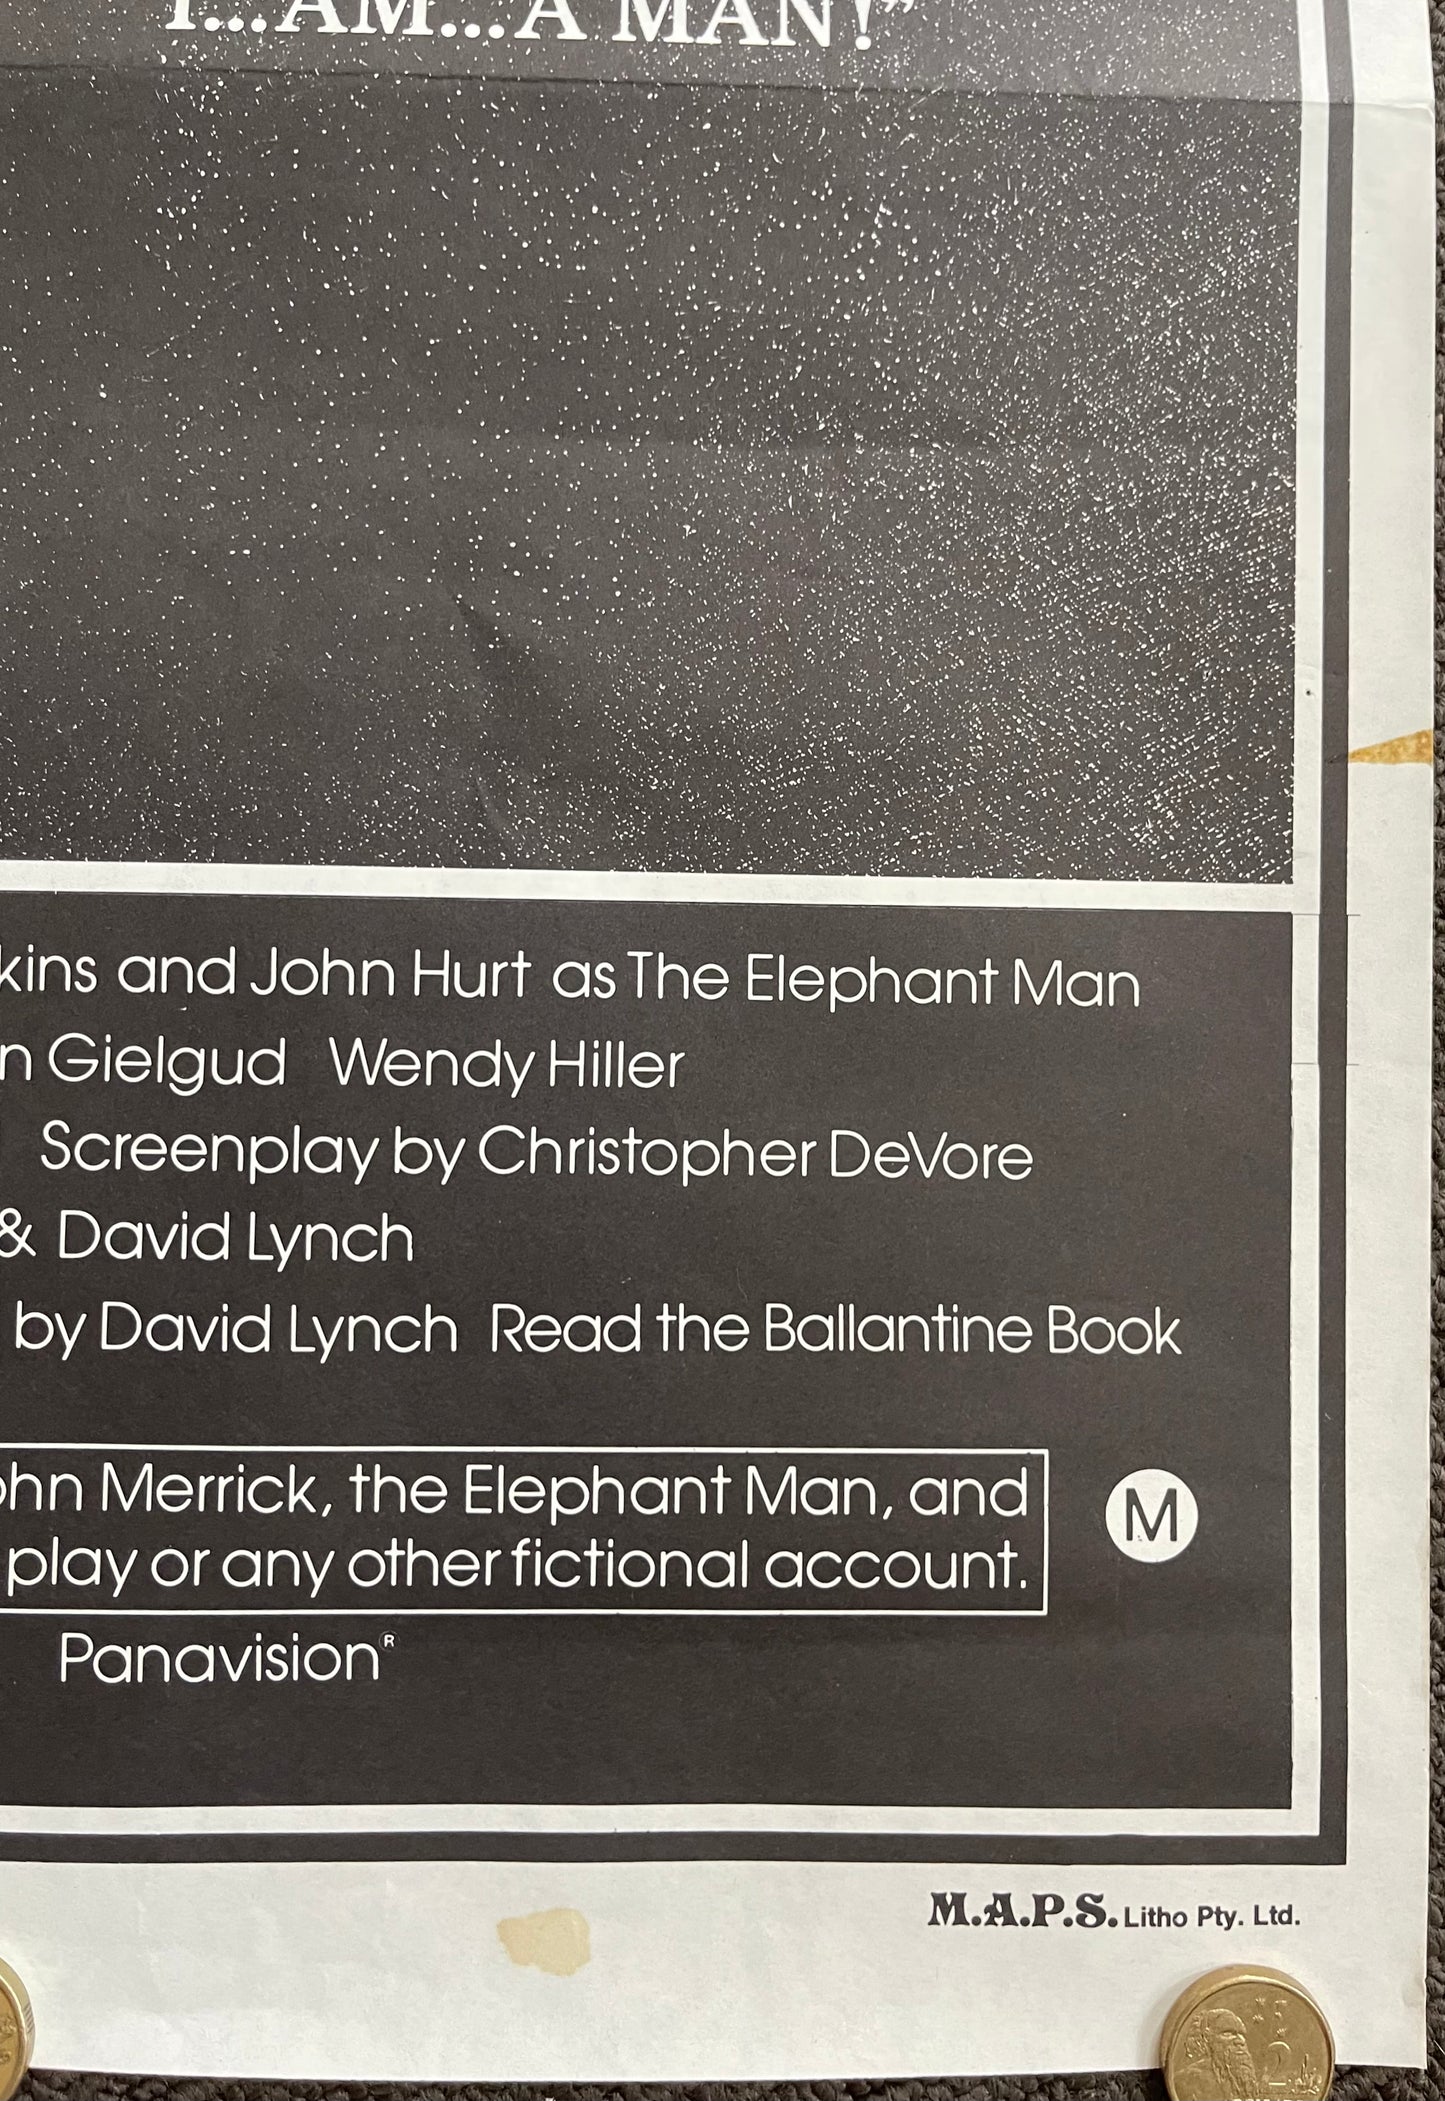 The Elephant Man (1980) - Daybill